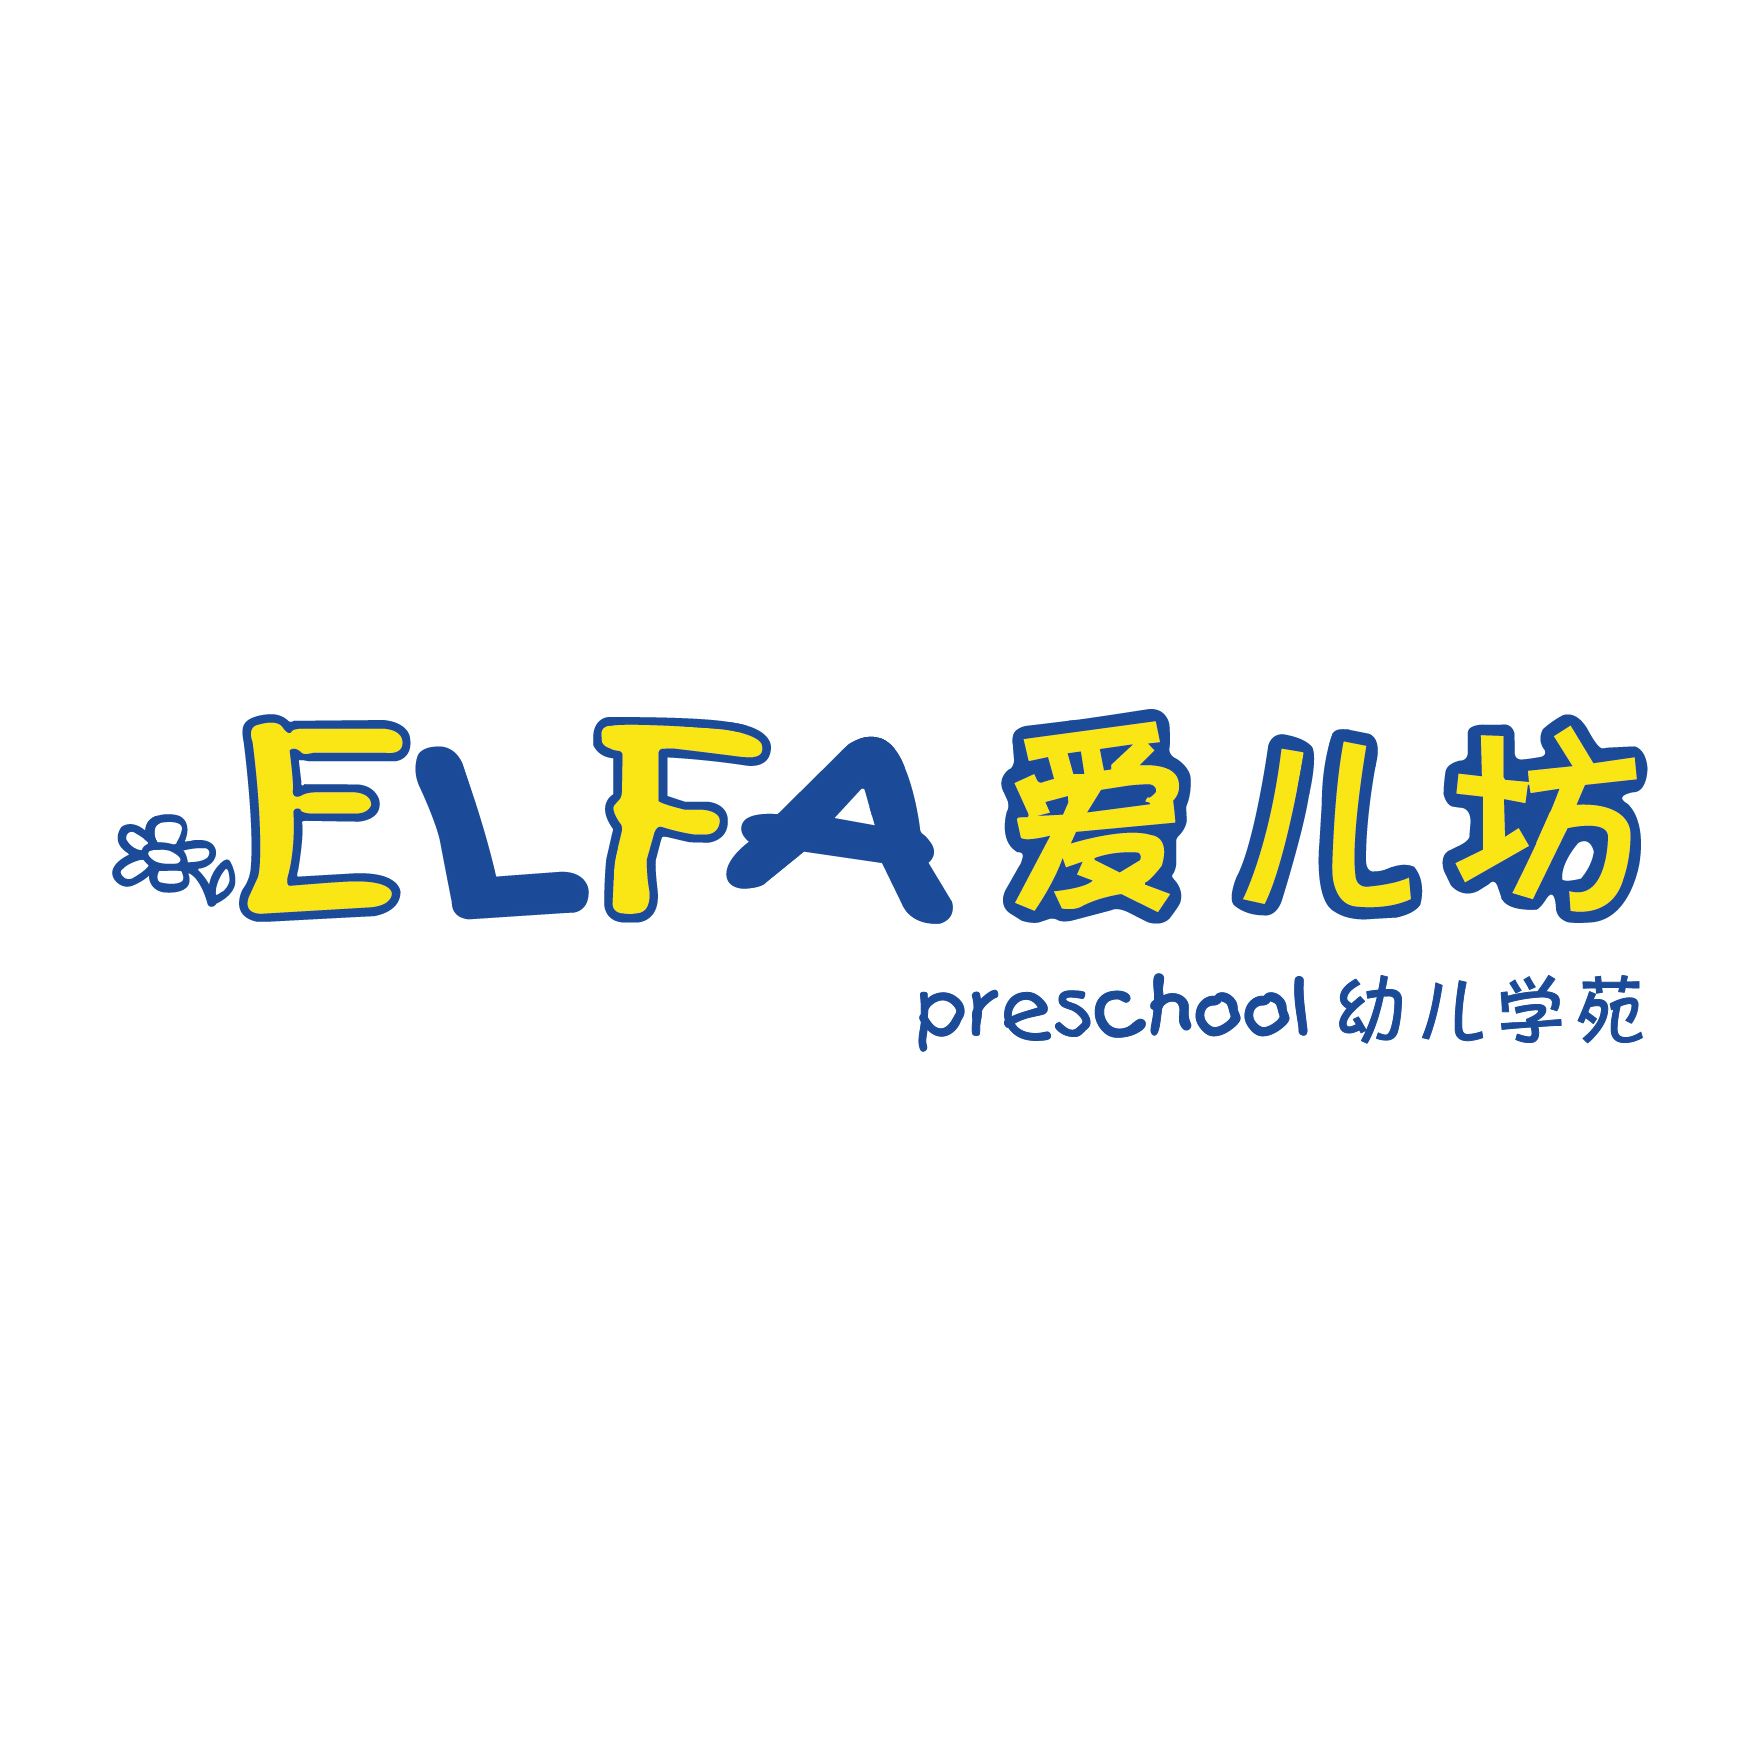 ELFA Chinese Preschool @ Pandan Valley